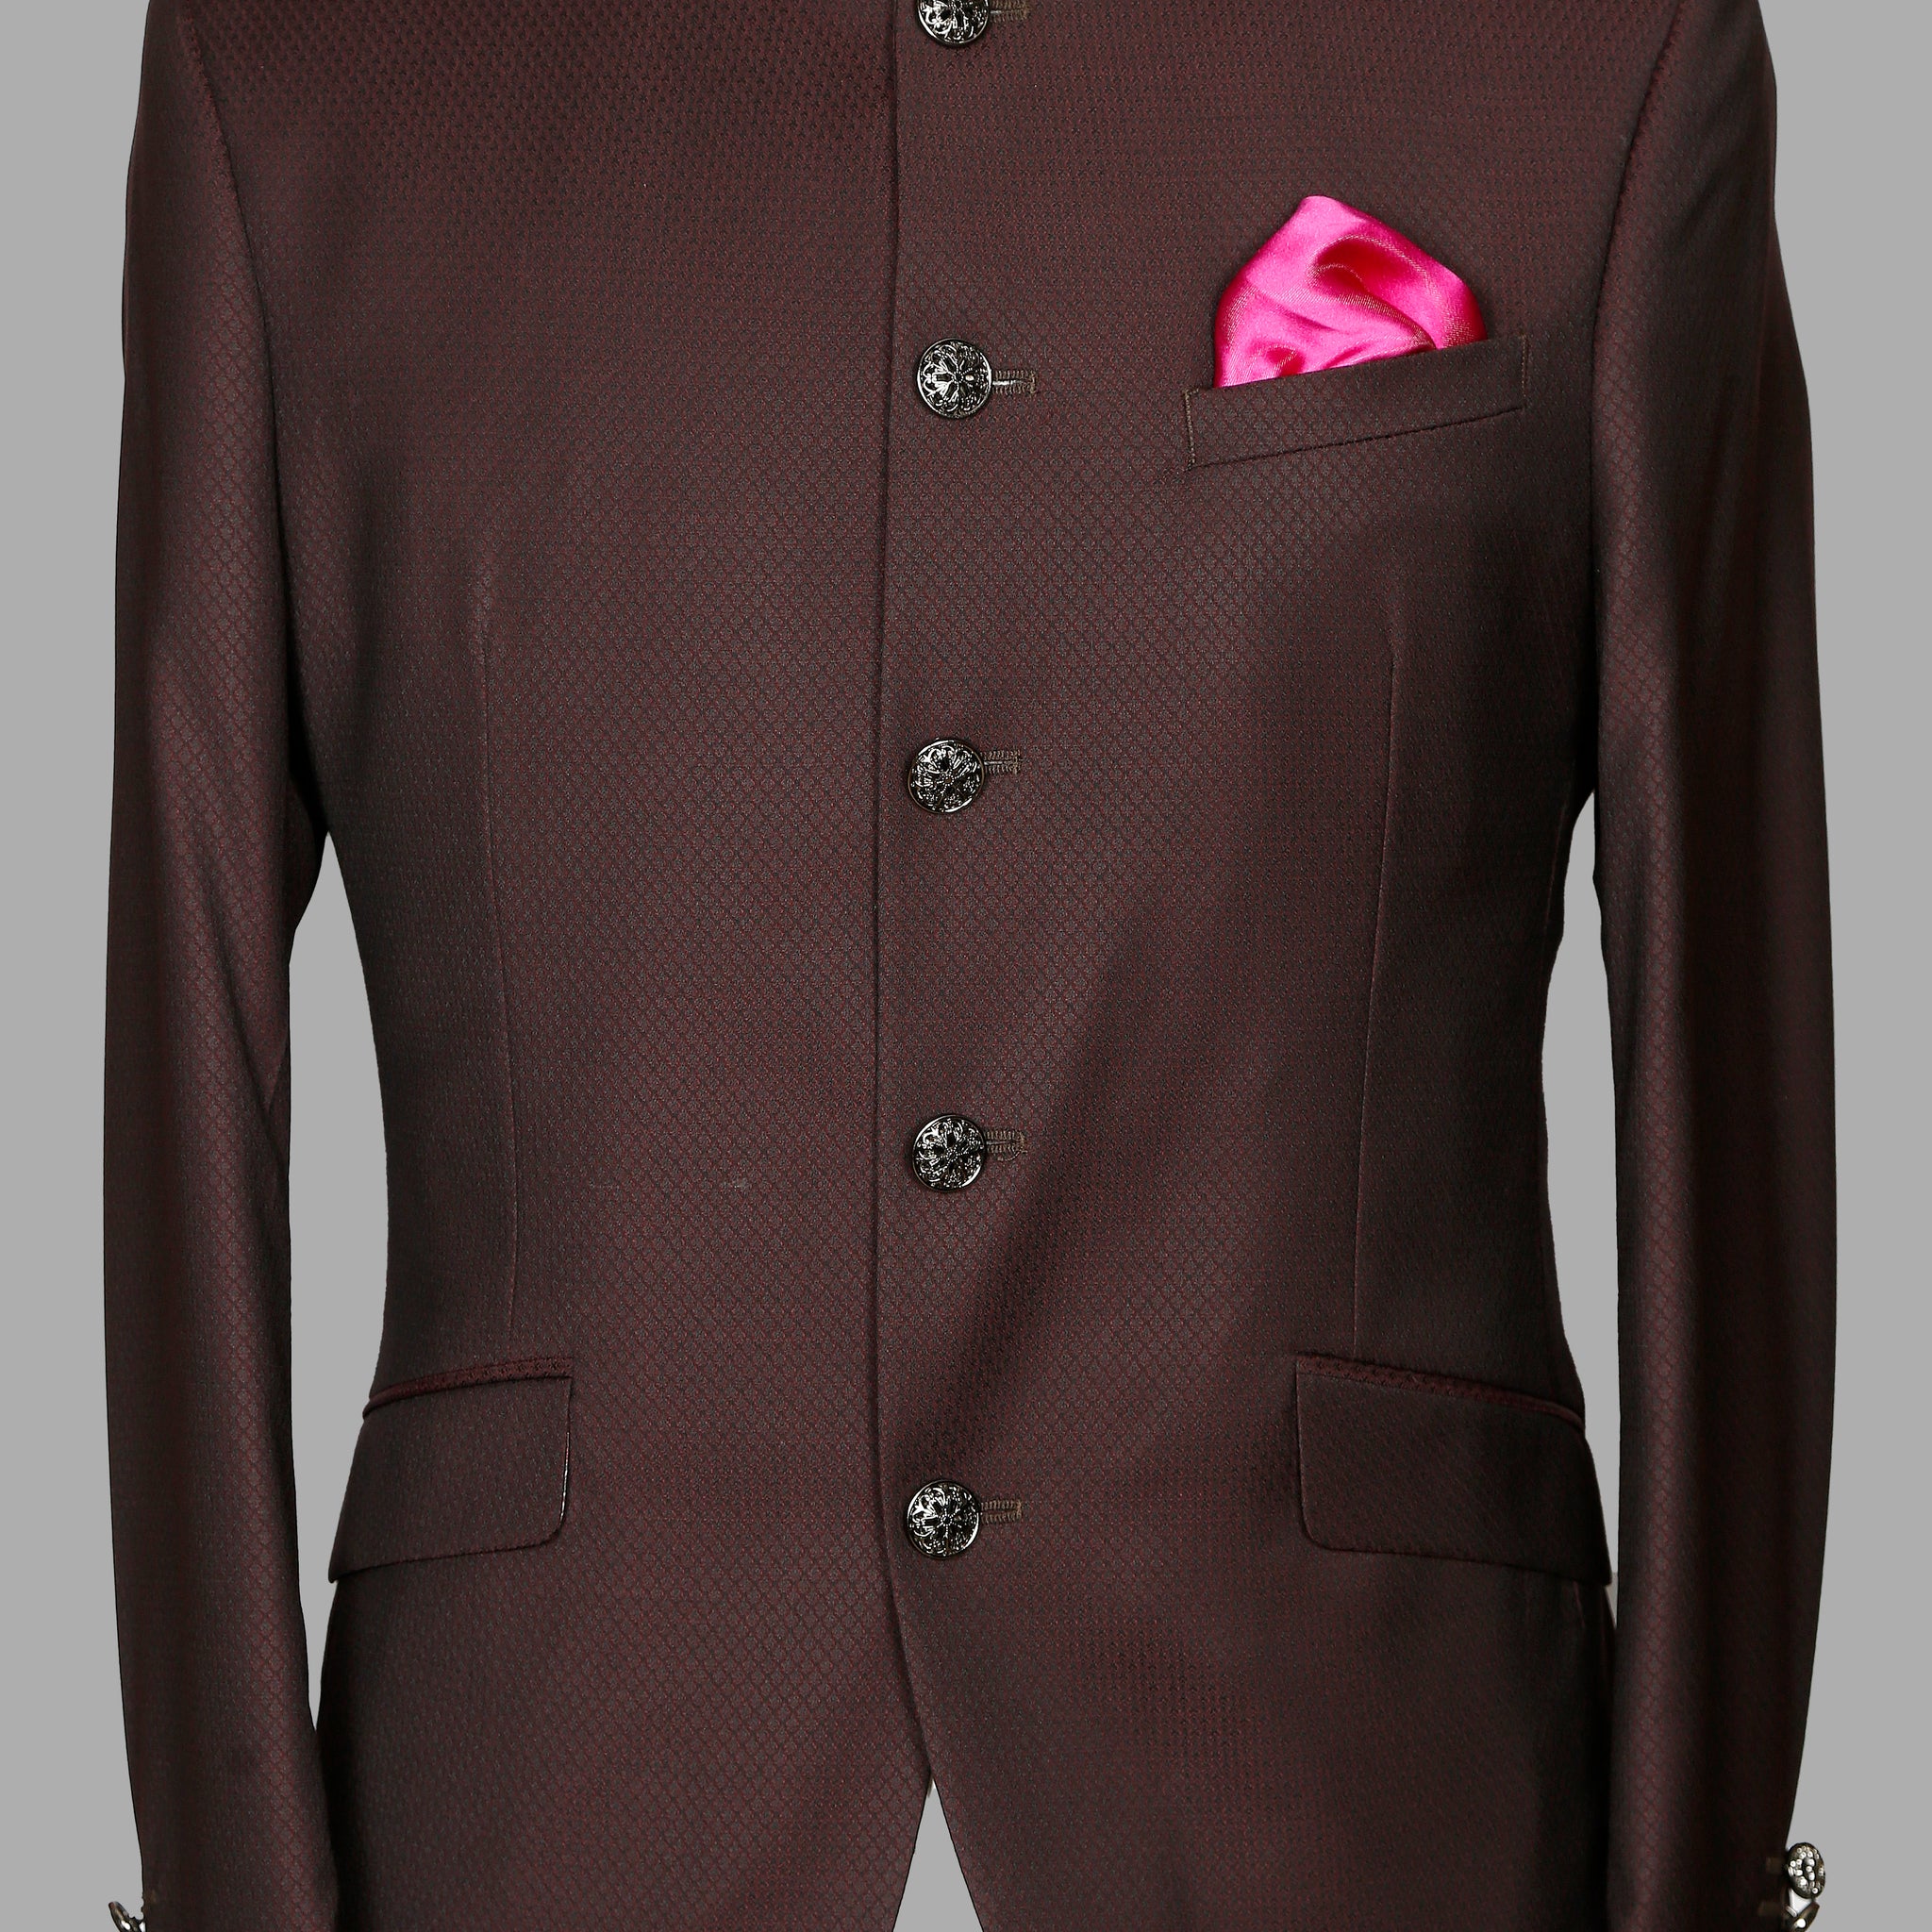 Wine Textured Designer Bandhgala Suit